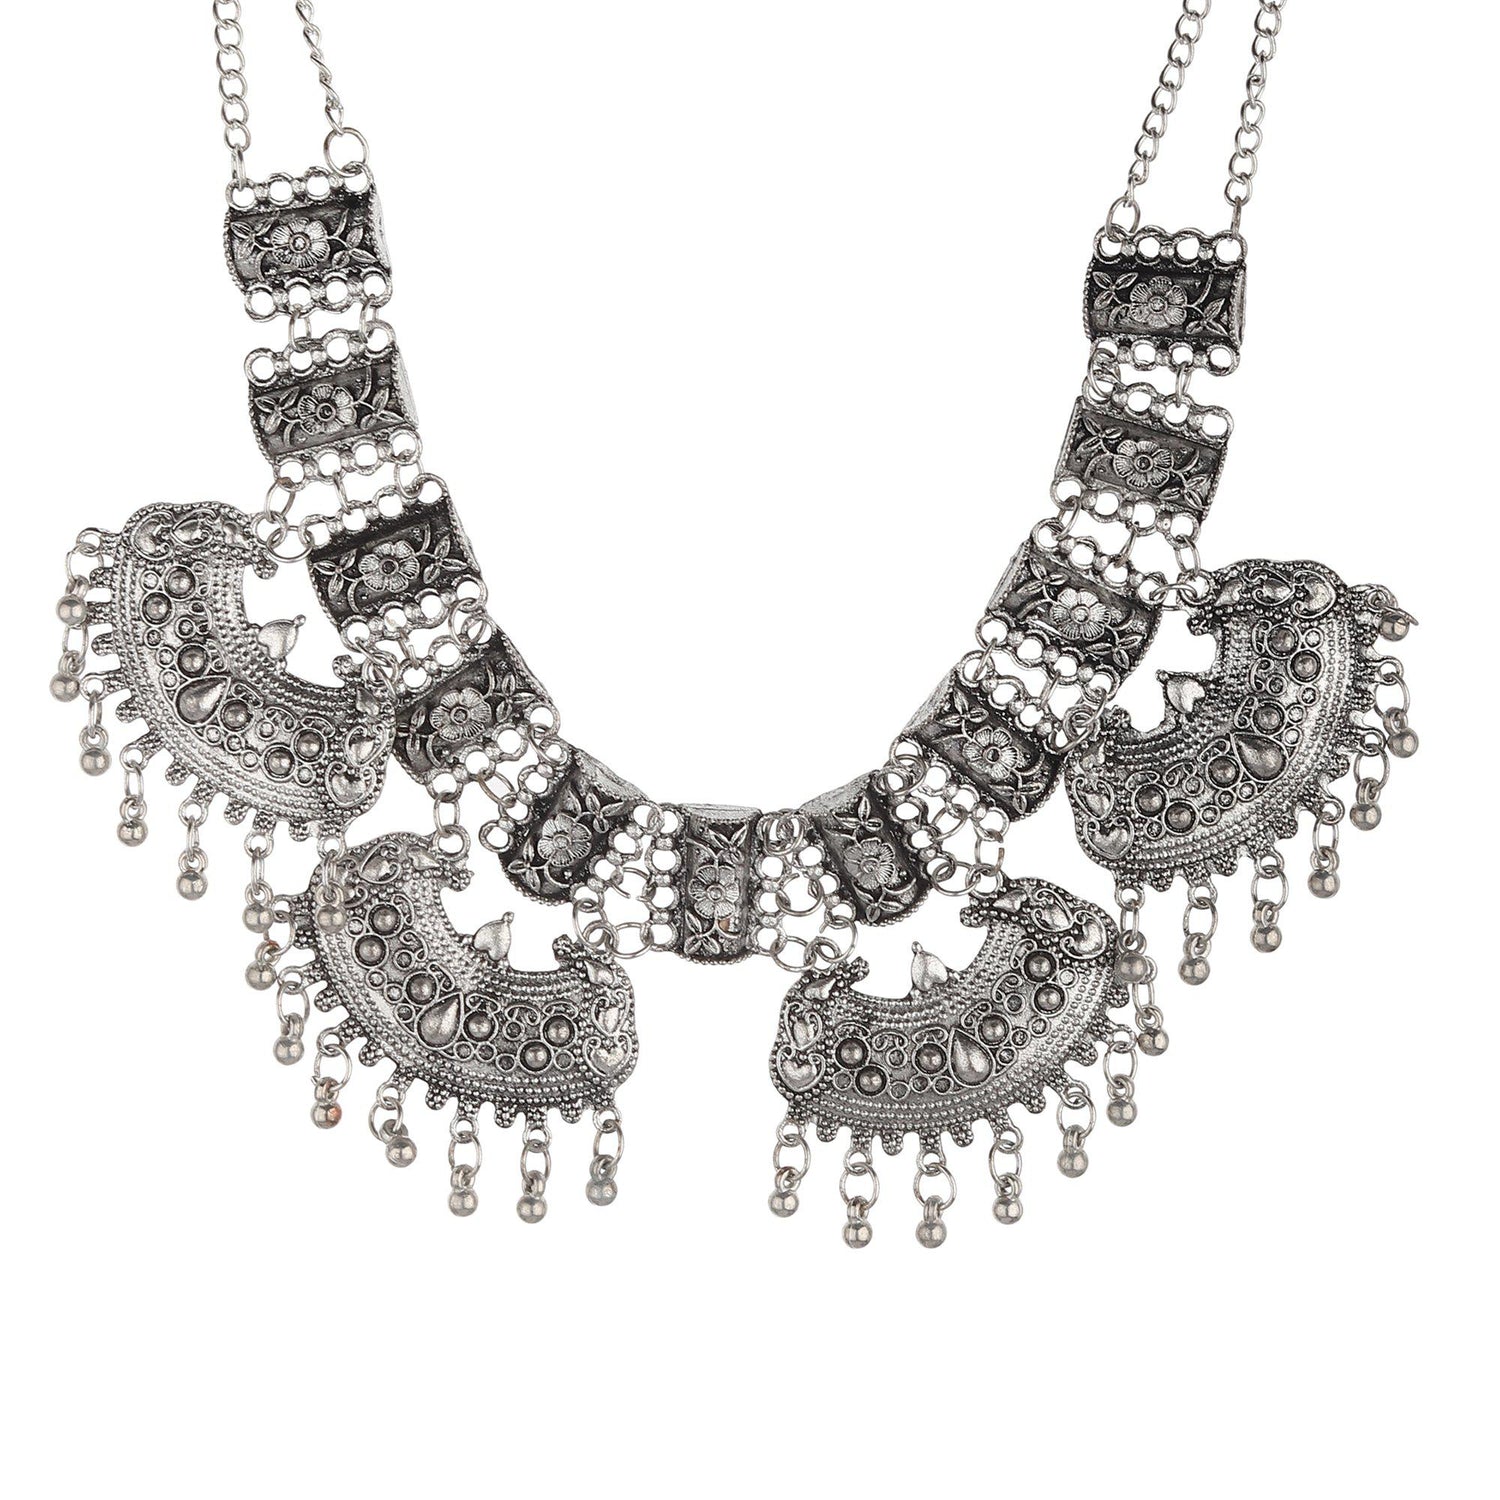 Multi Chandbali Design Oxidised Necklace-Necklace Set-ONESKYSHOP